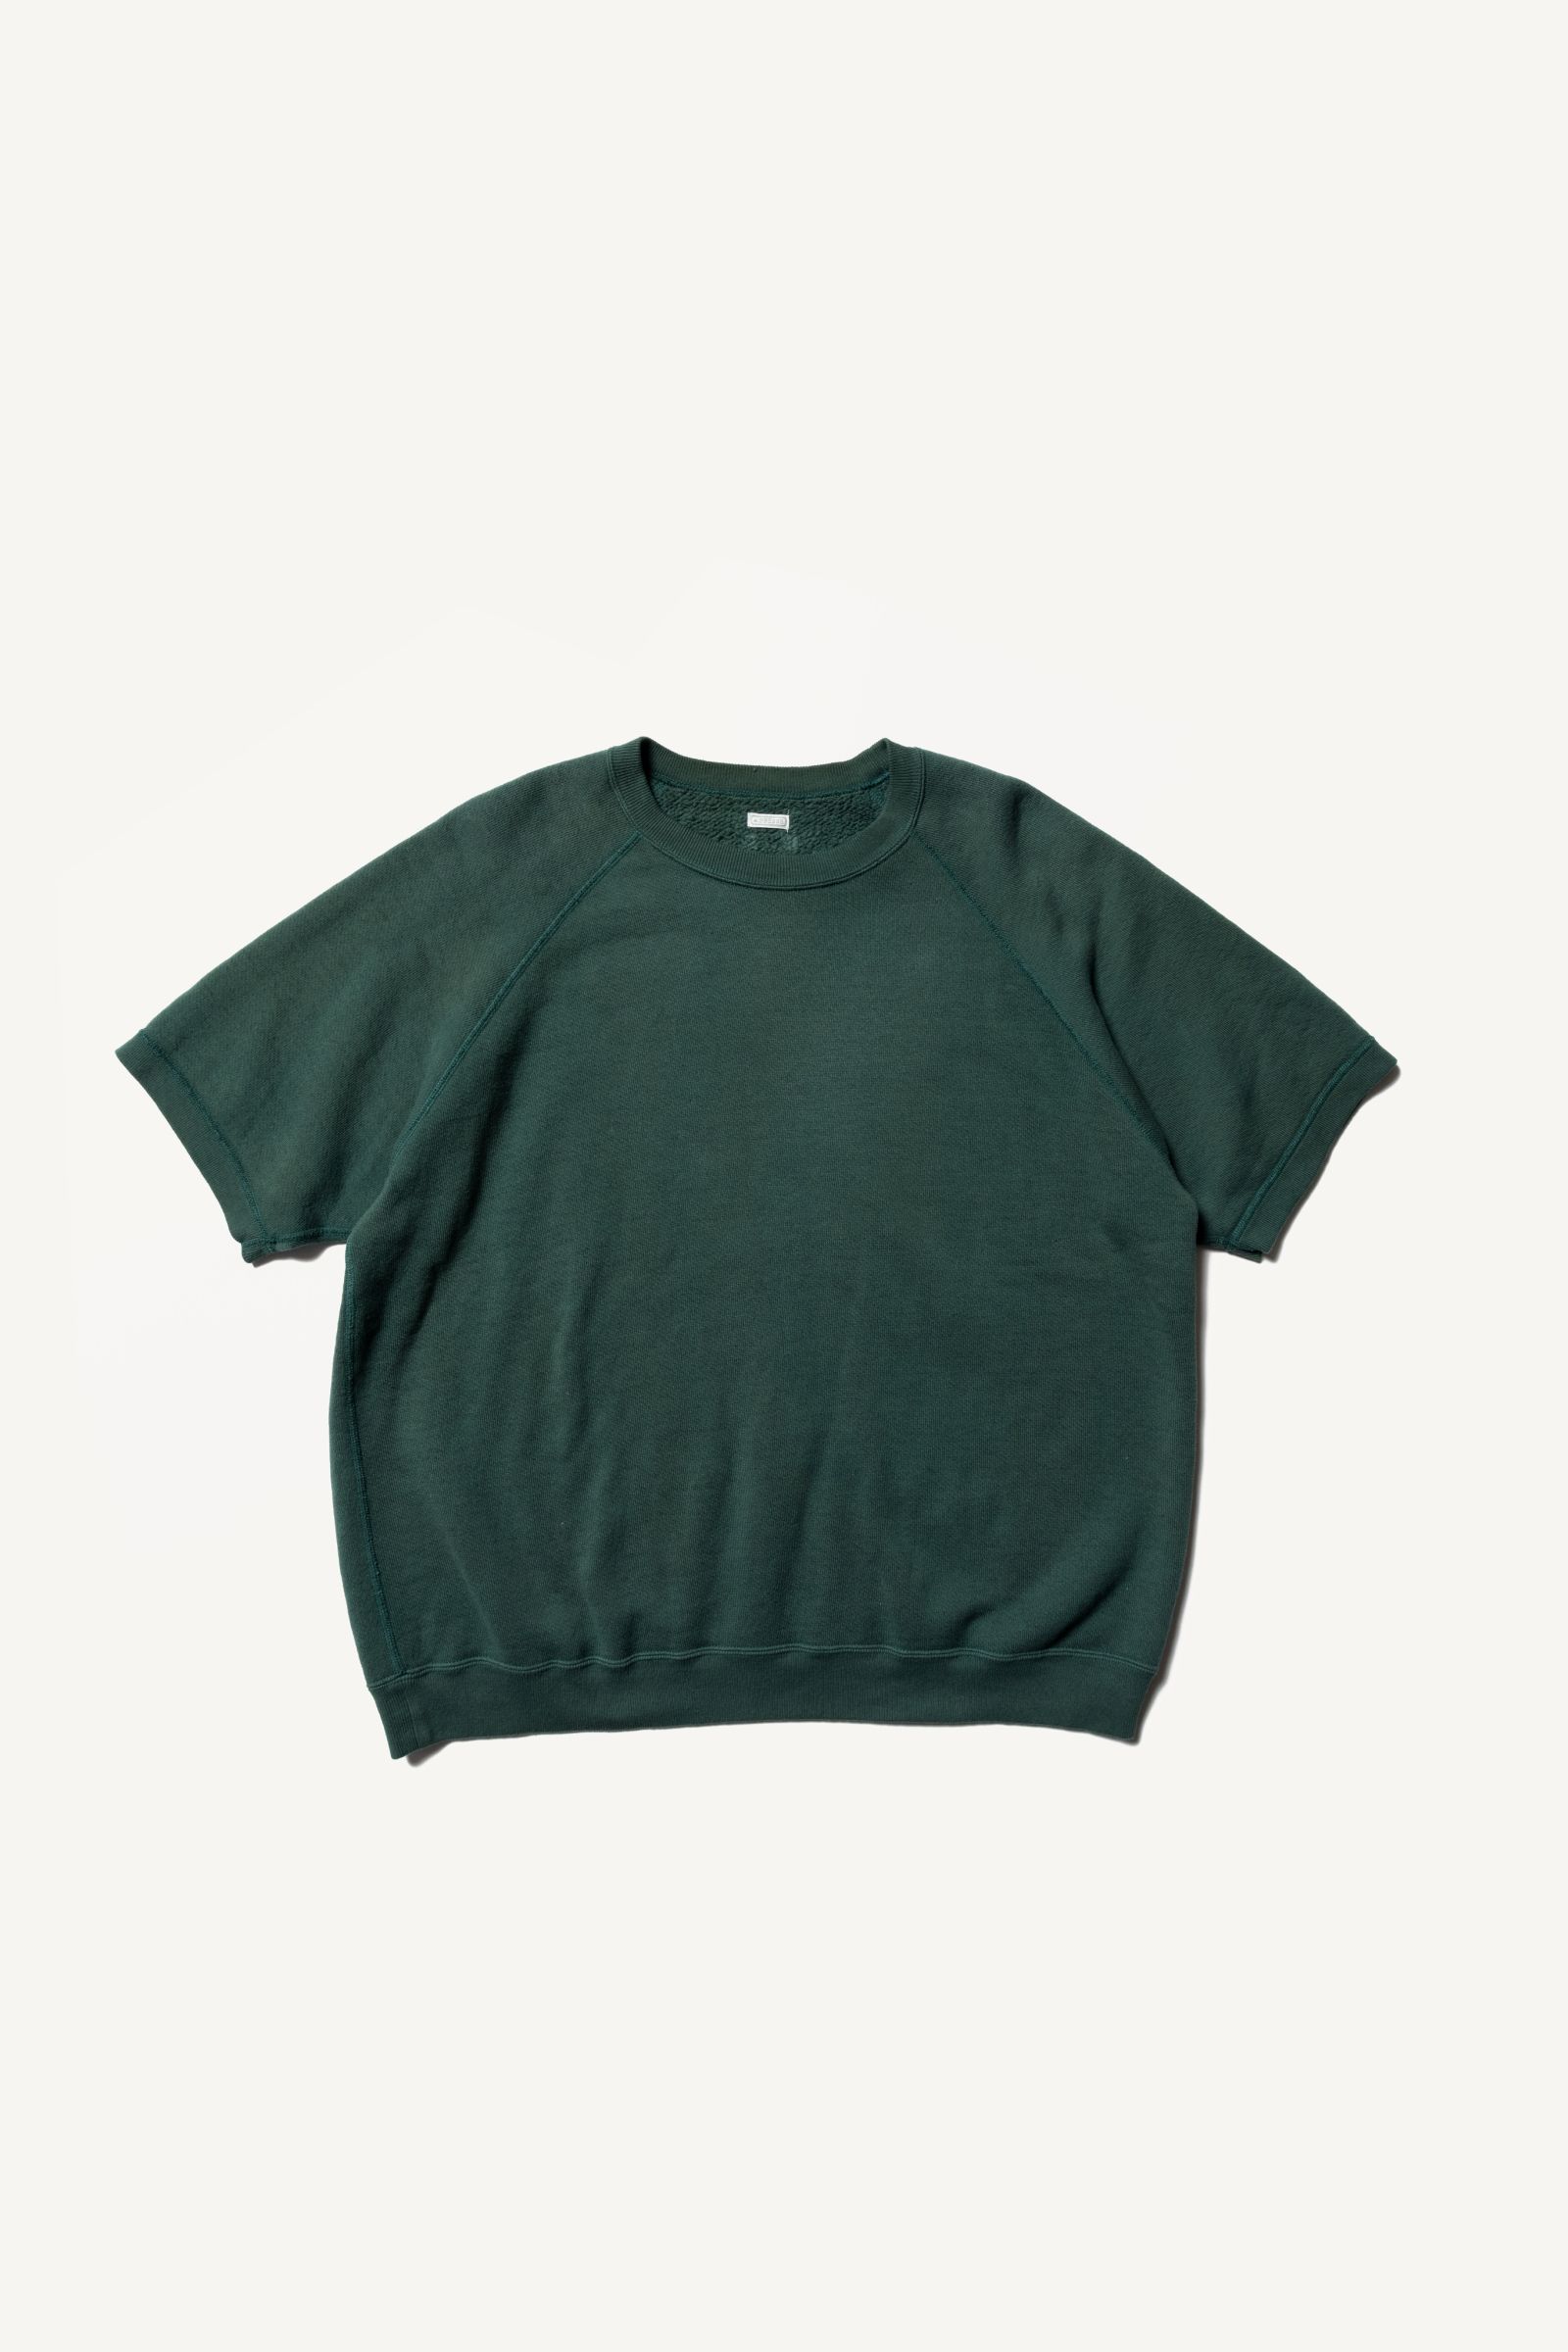 A.PRESSE - s/s vintage sweatshirt -green- 23ss | asterisk